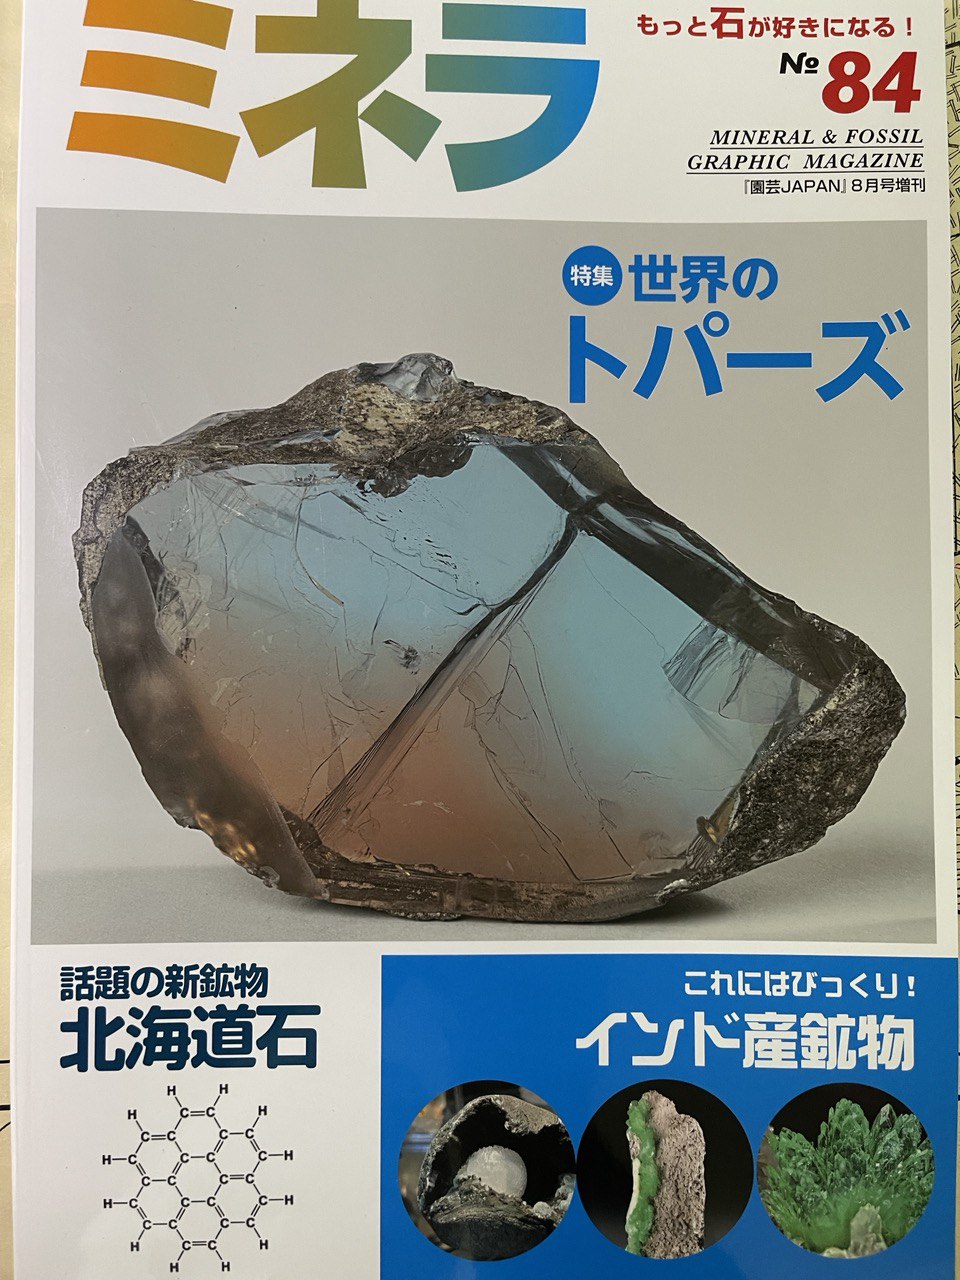 Mineral & fossil graphic magazine